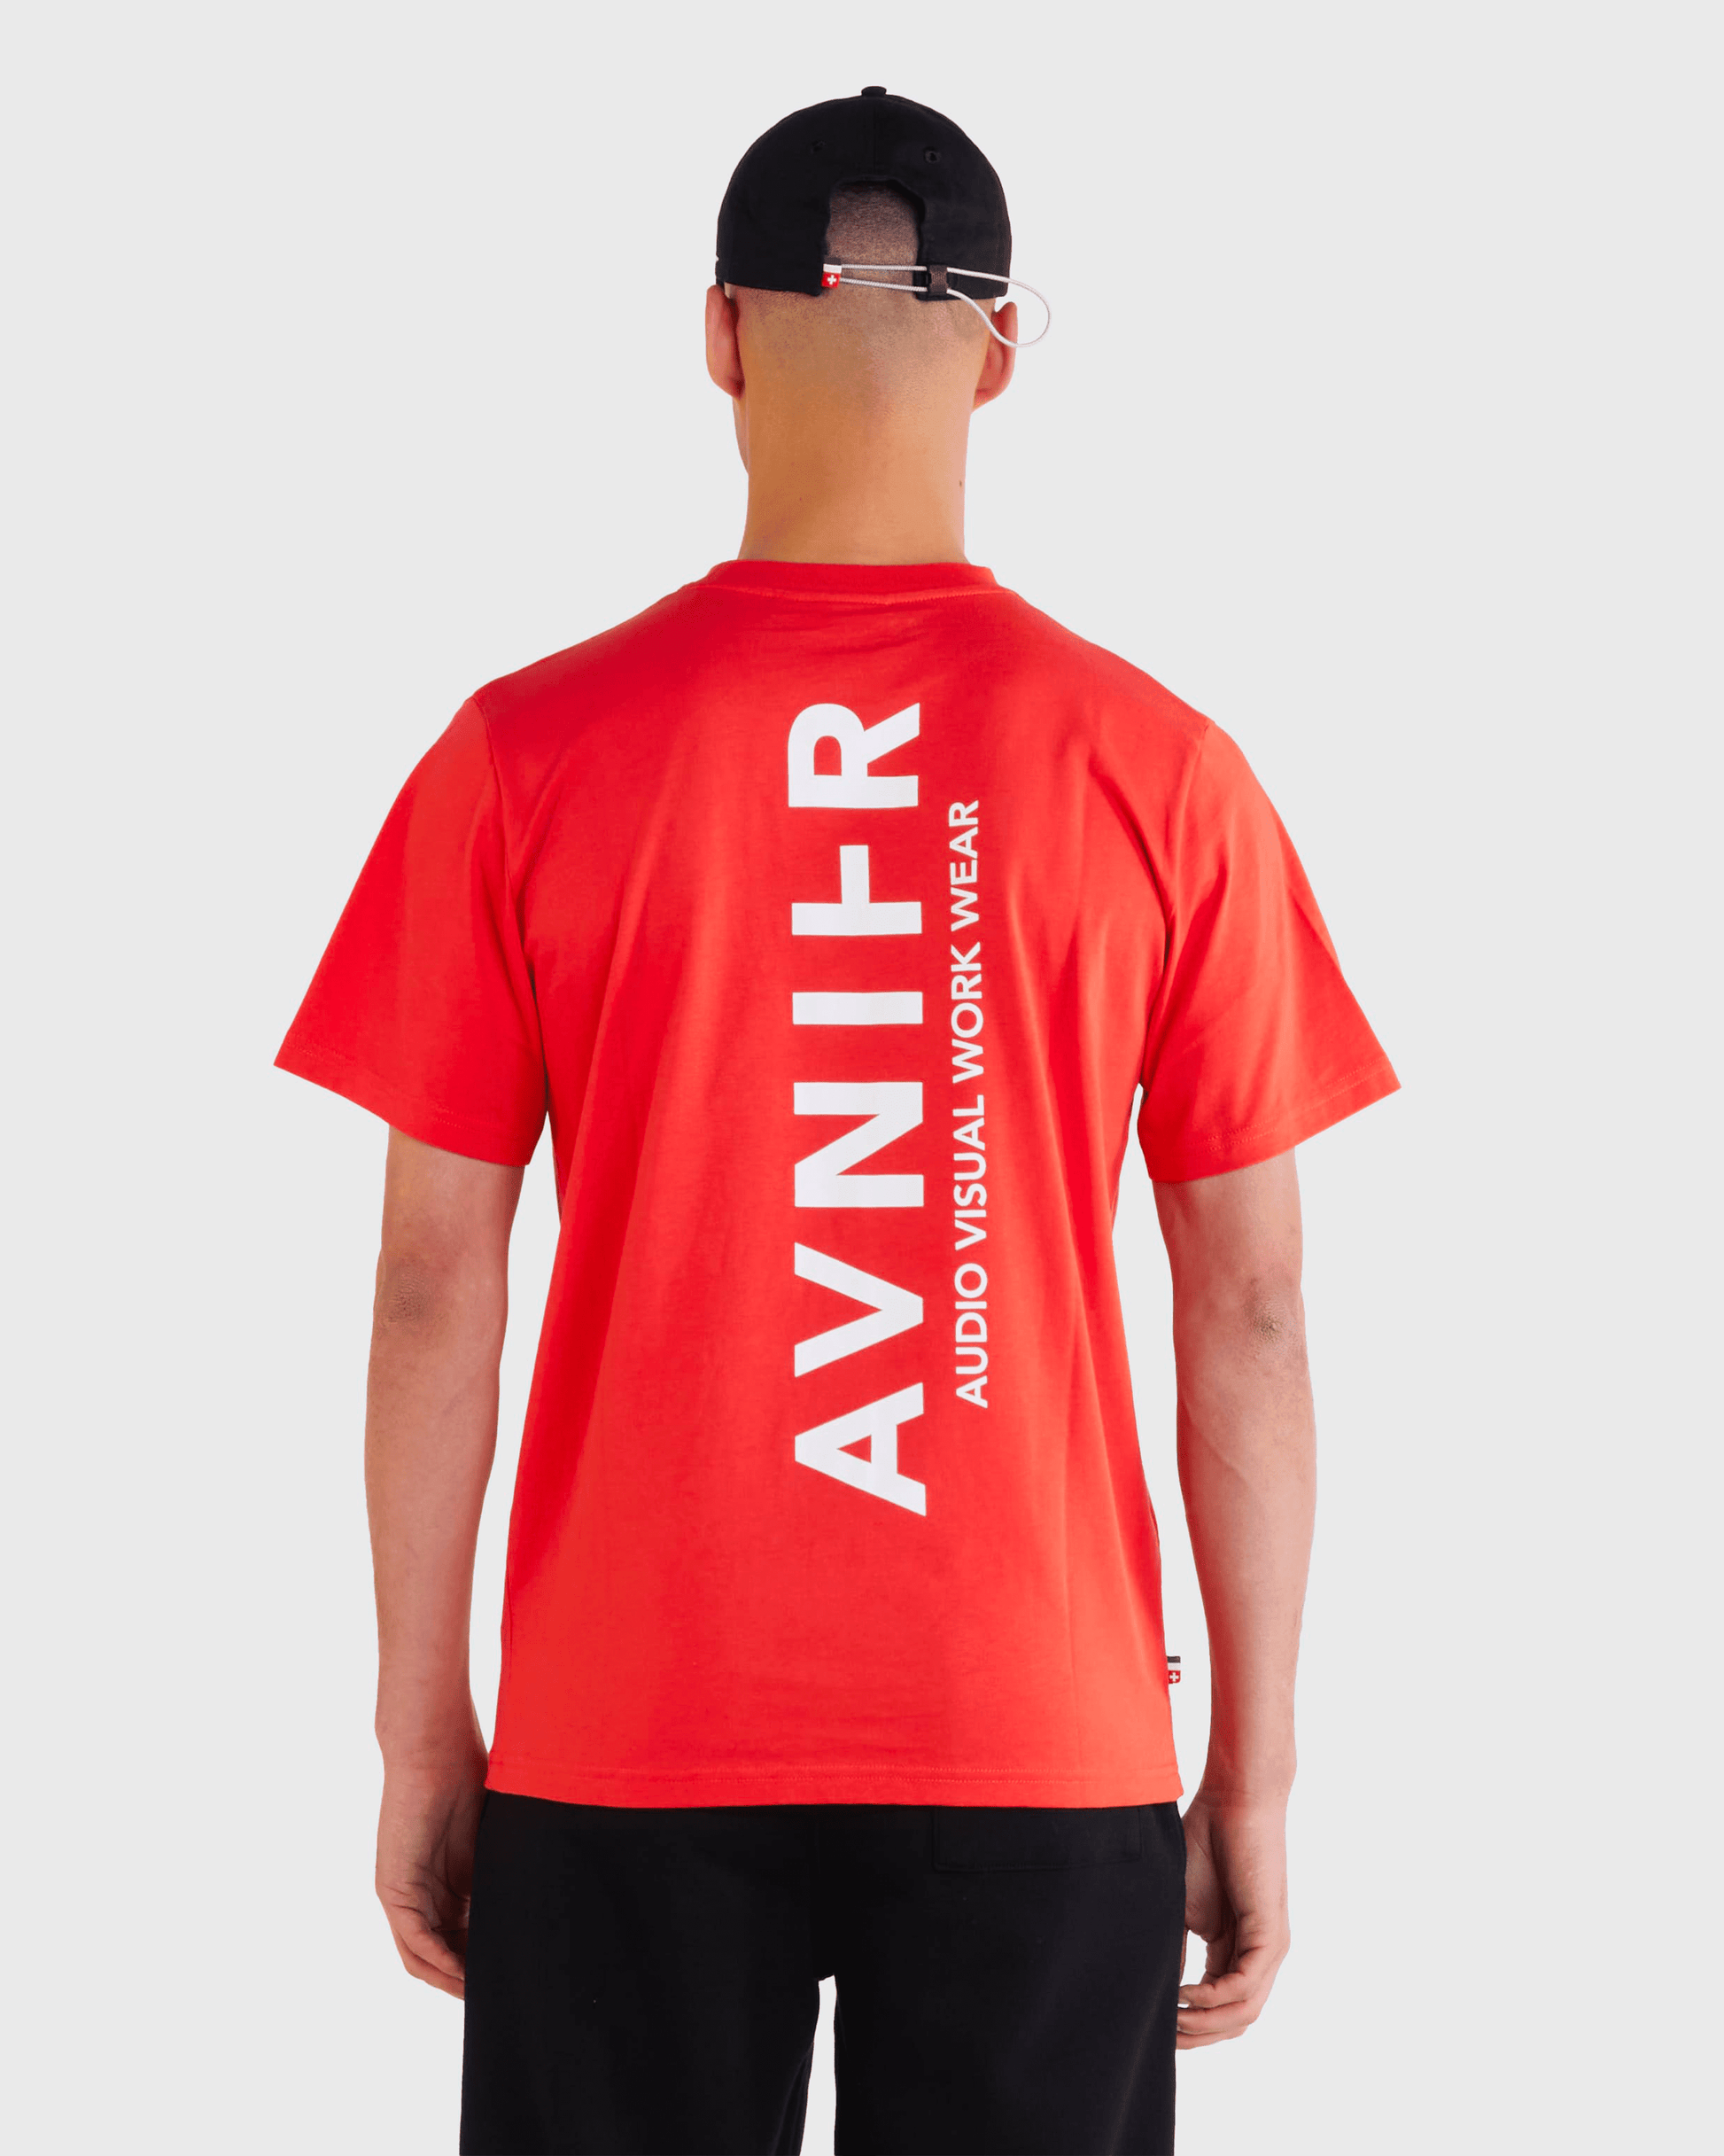 t-shirt-source-red-clay-vertical-v3-avnier-avenir-4-silhouette-dos - argile rouge